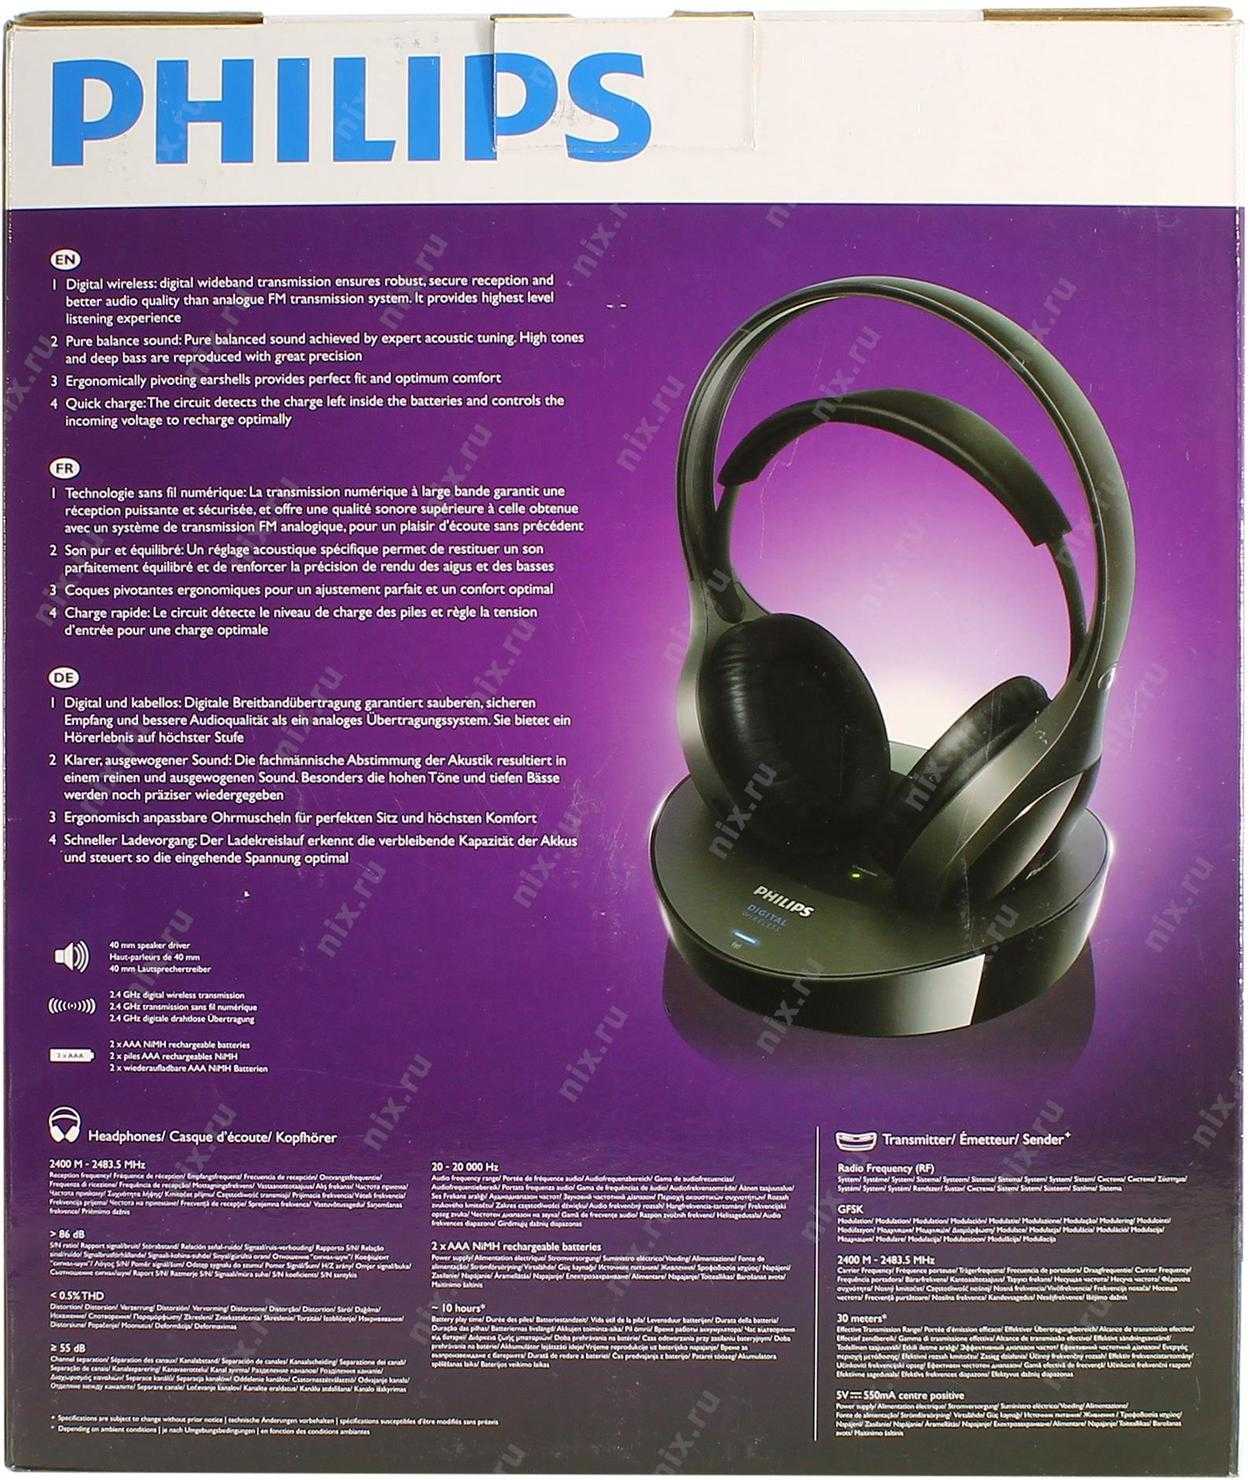 Philips shd8900